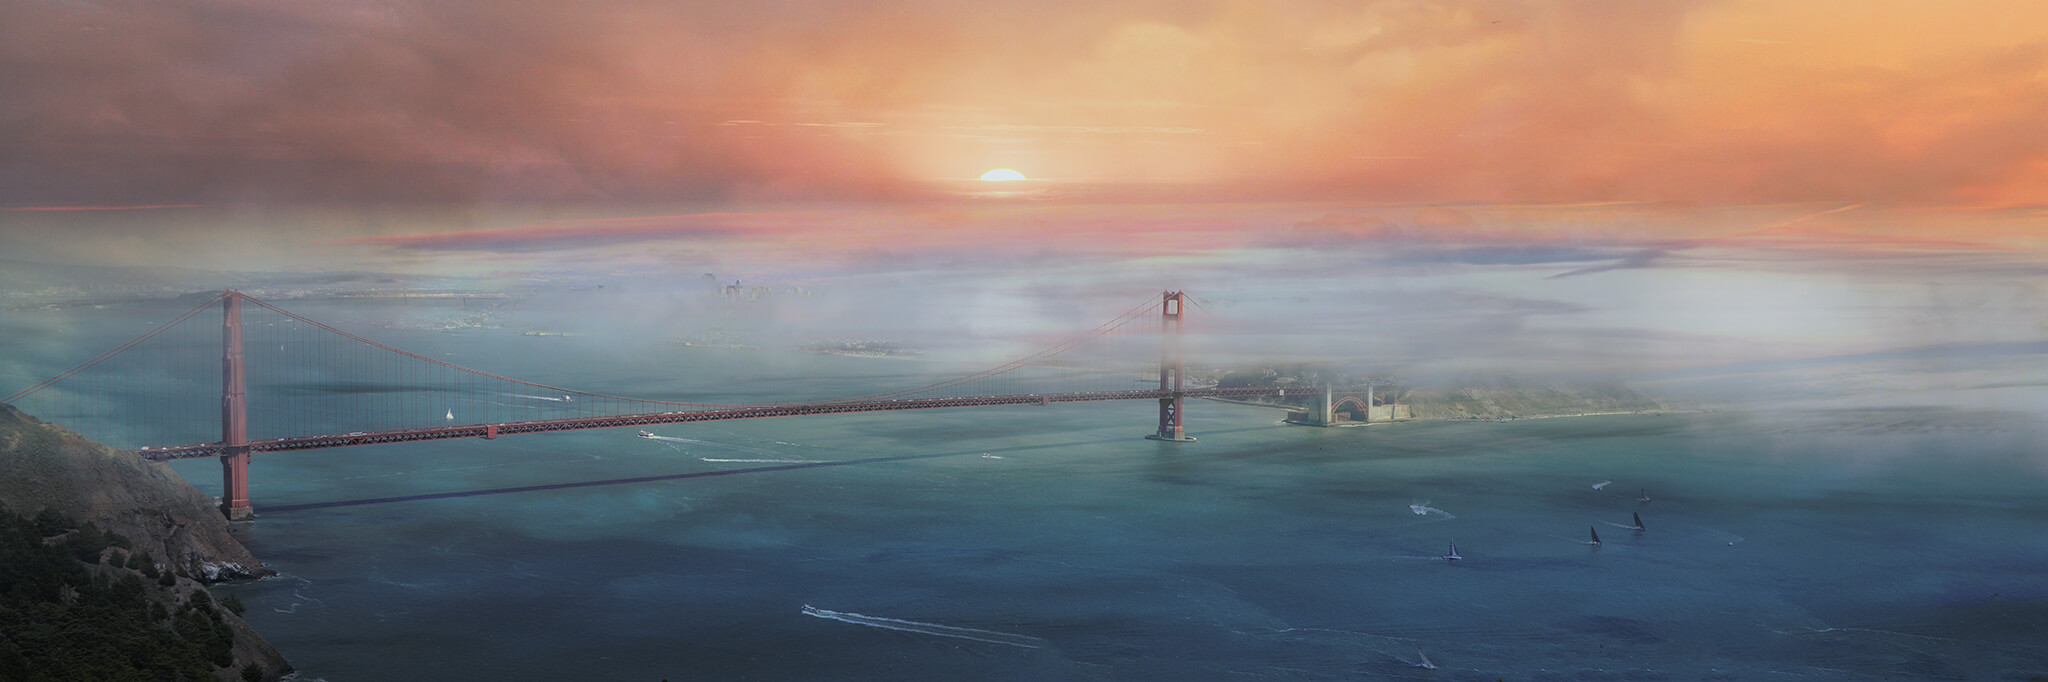 Golden Gate Bridge with sunrise.